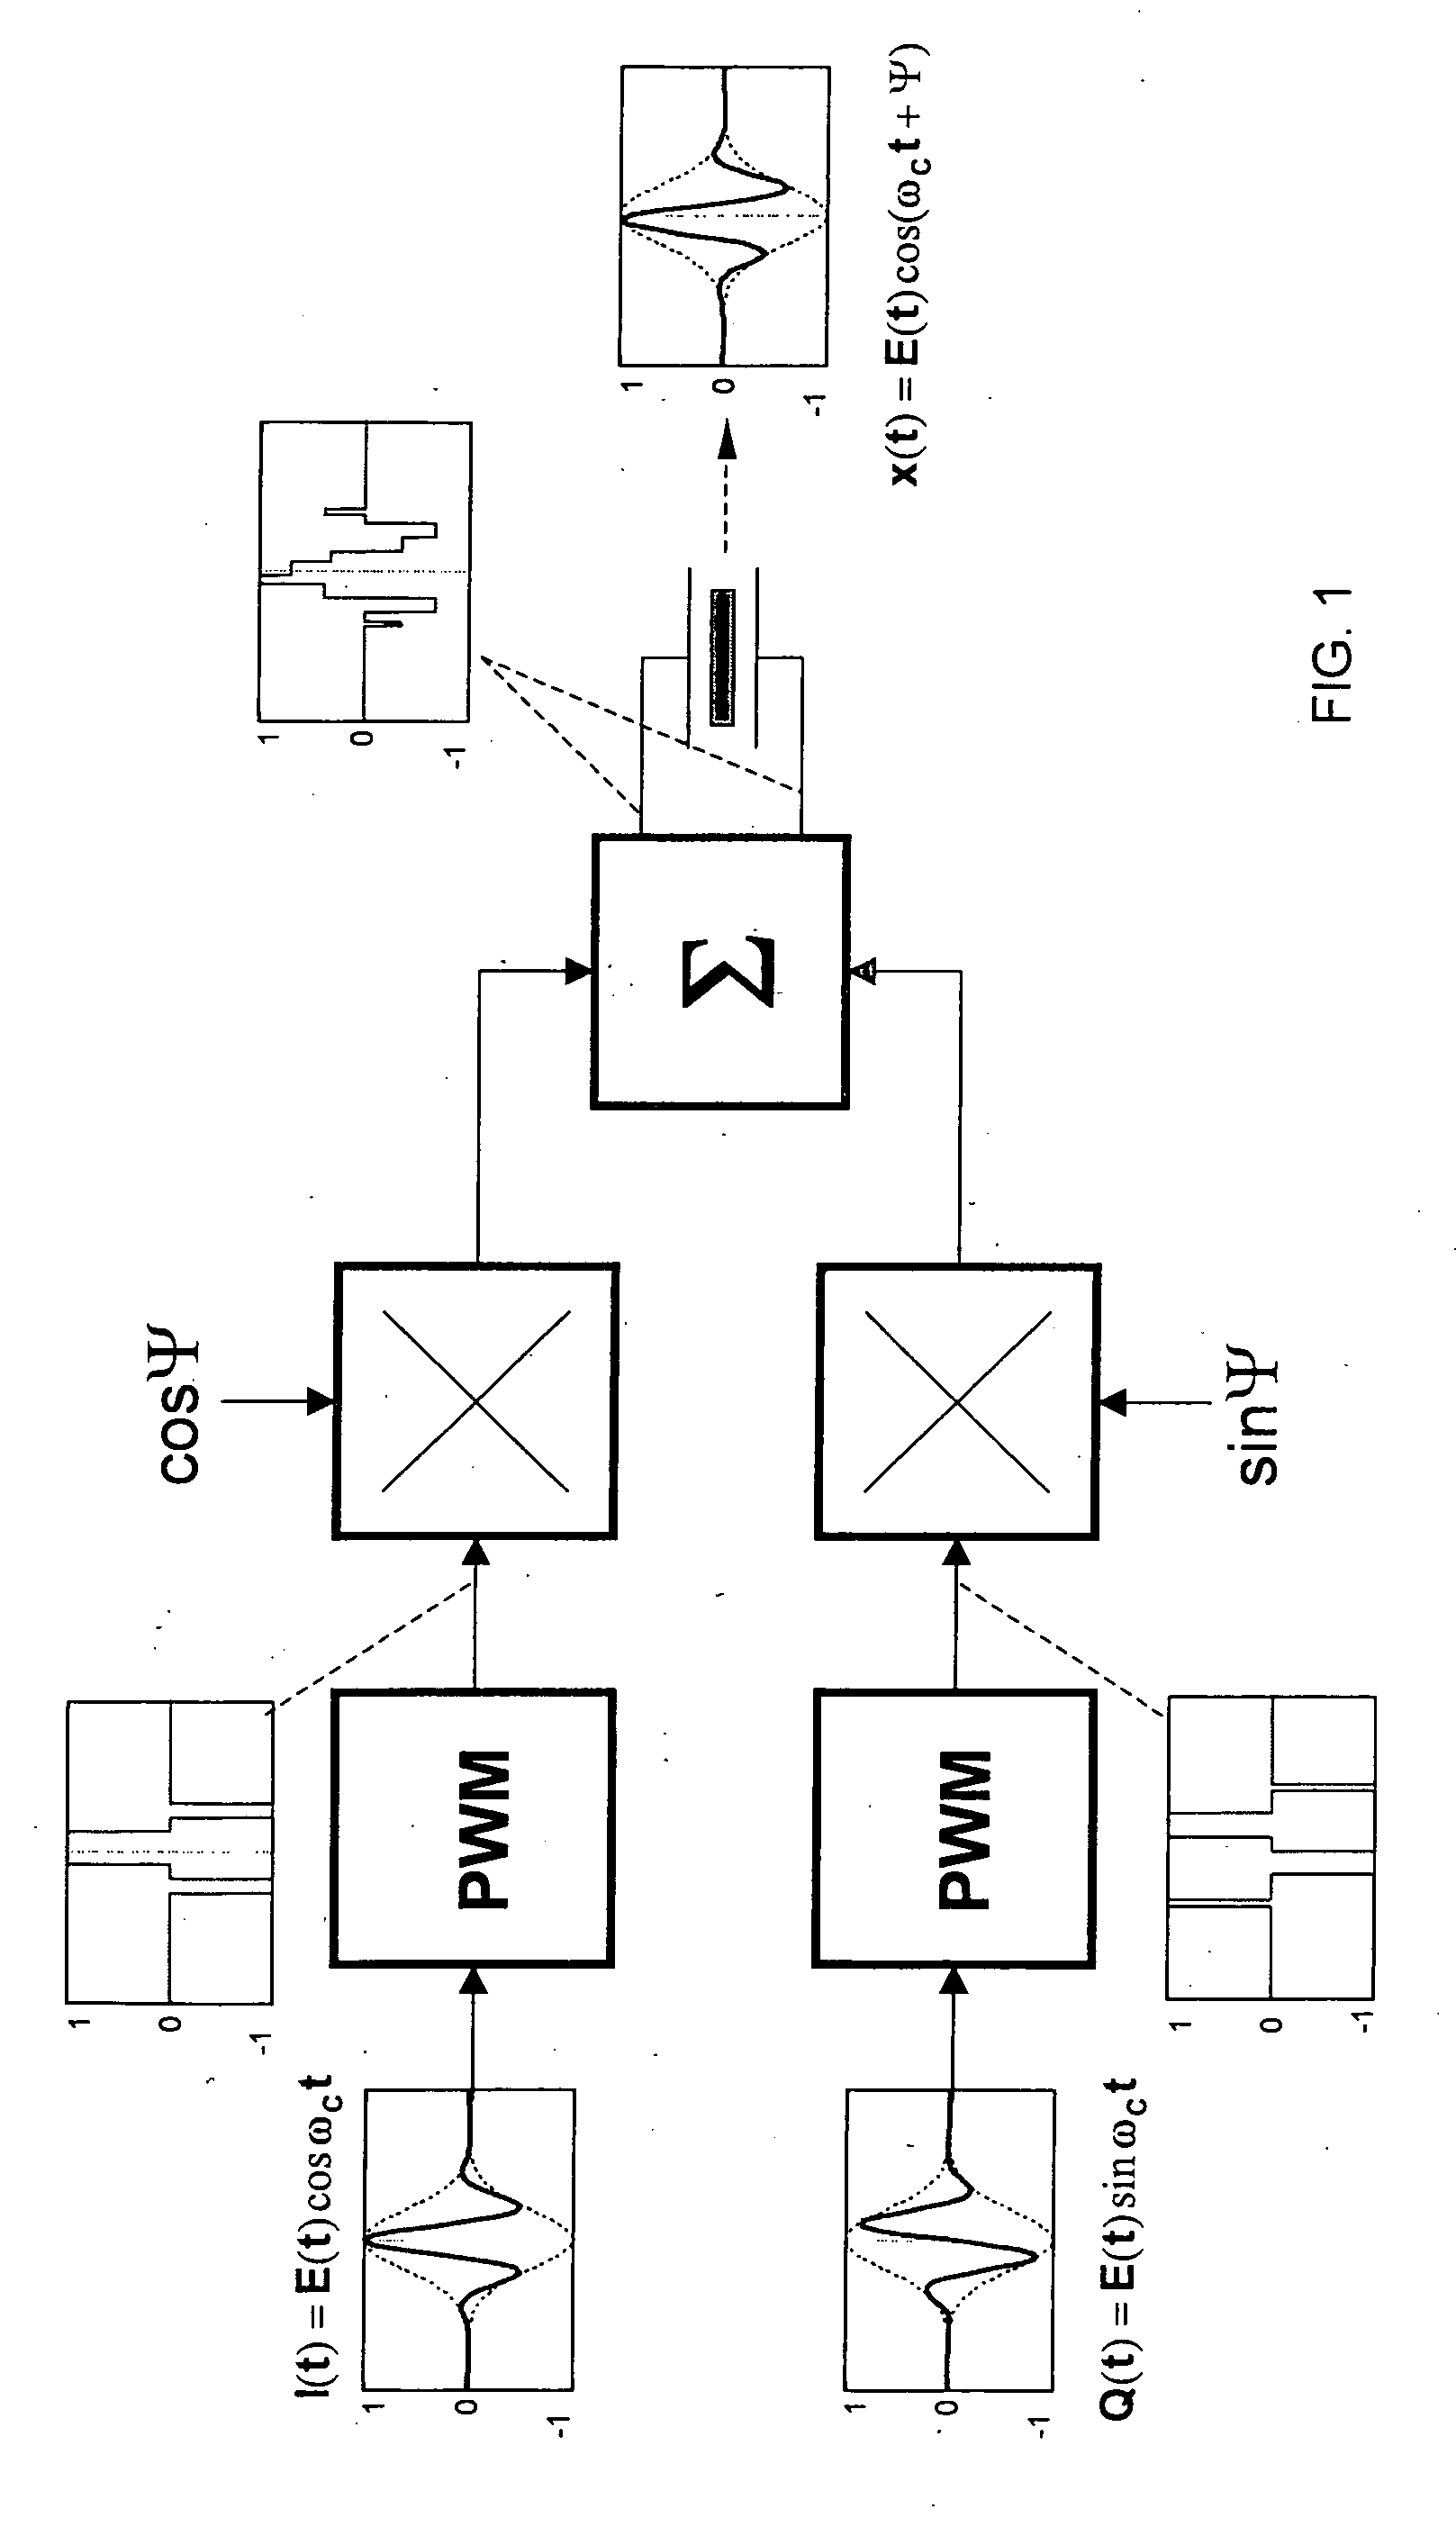 Ultrasound transmit beamformer integrated circuit and method